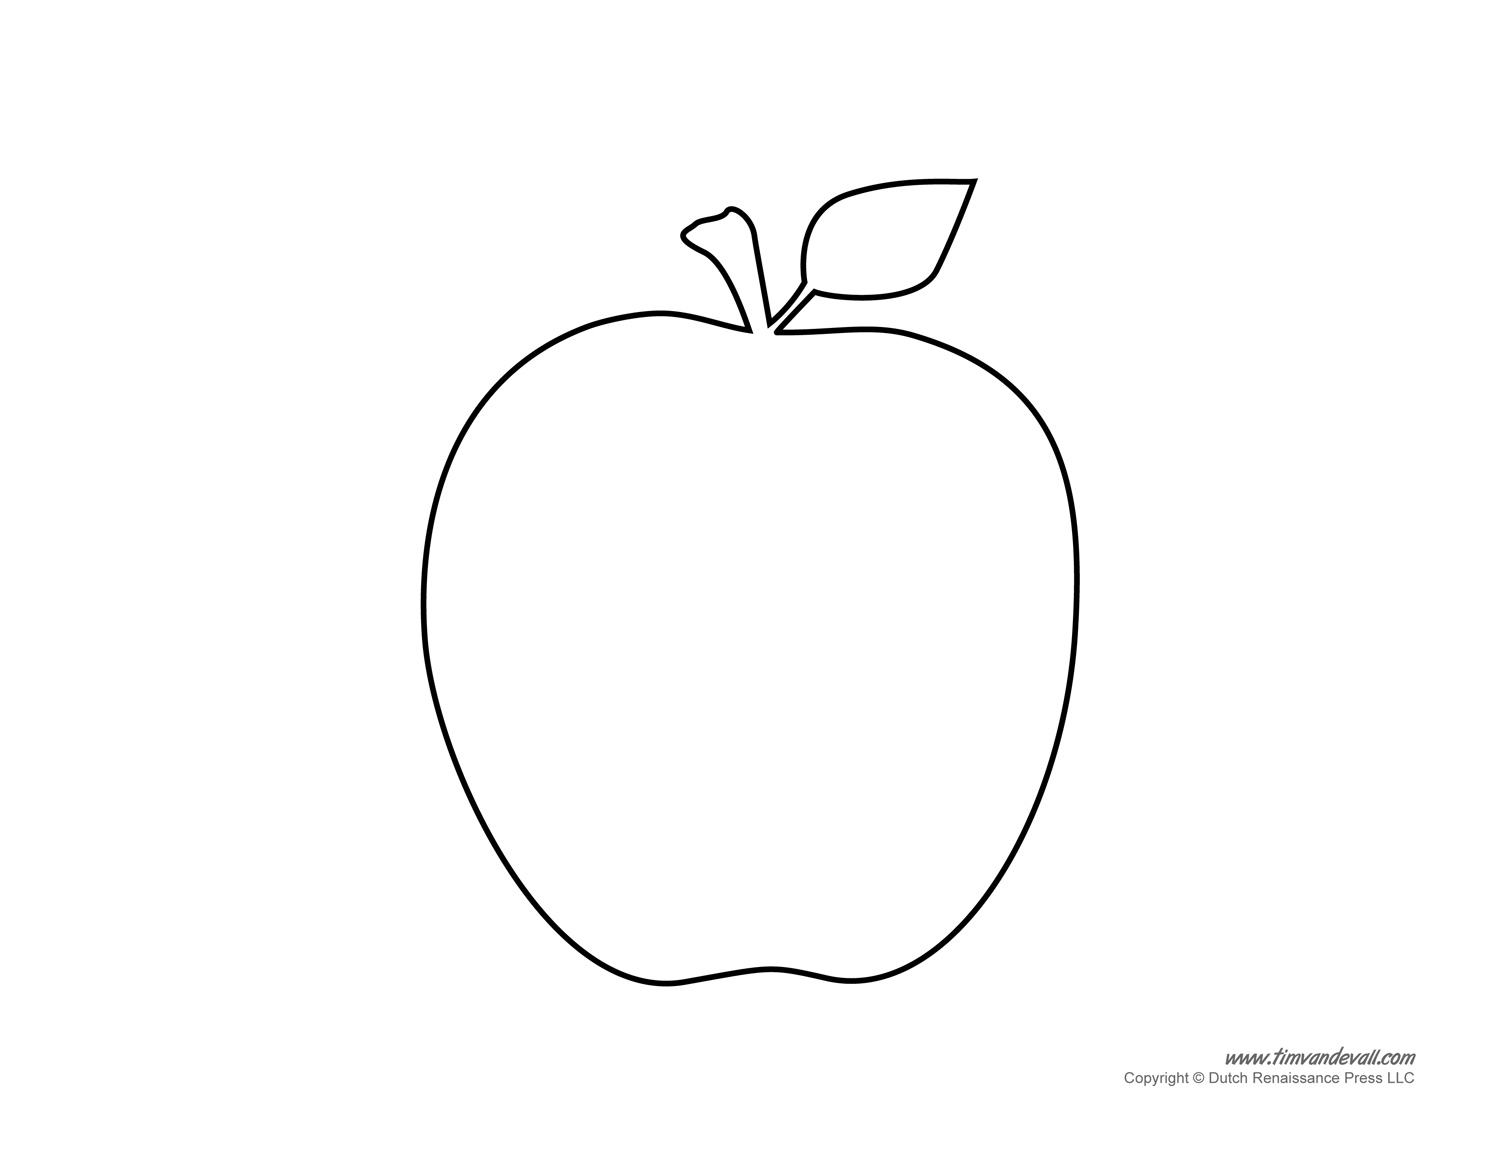 apple-template-1.jpg